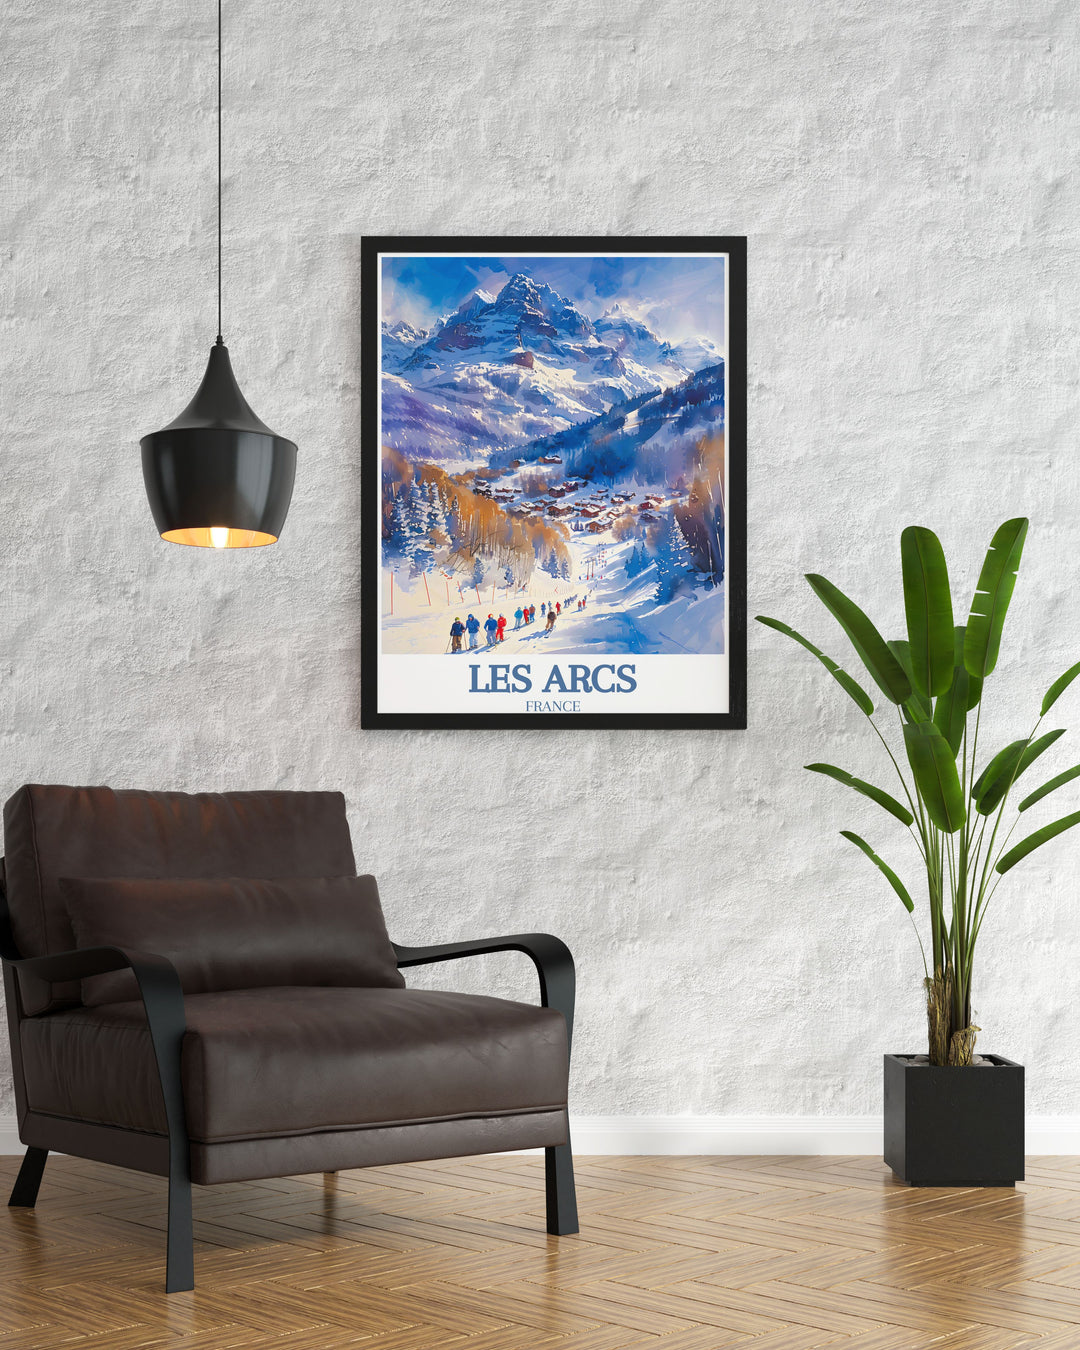 Retro Ski Poster showcasing Les Arcs in Paradiski ski area Mont Blanc with a nostalgic design evoking classic ski resort advertisements blending history and modern snowboarding art